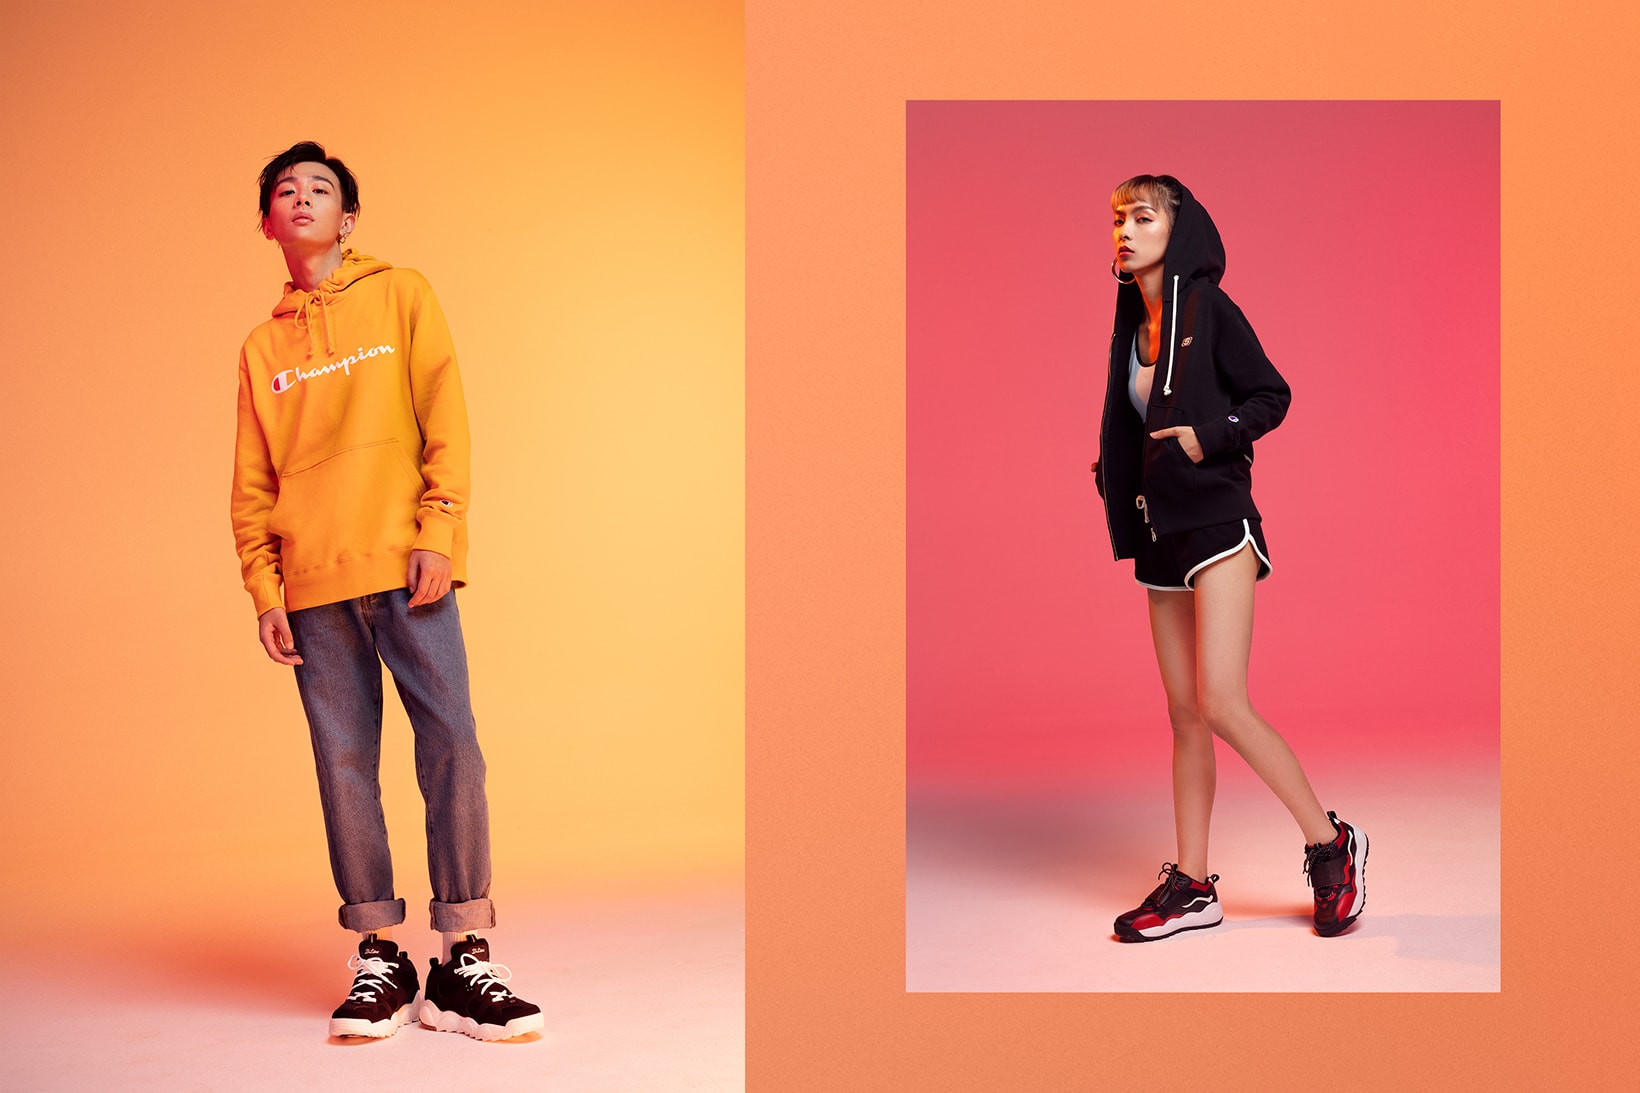 Skechers x Champion Clothing Collaboration 2018 Leisurewear Sportswear Street Style Chunky Sneakers 90s 